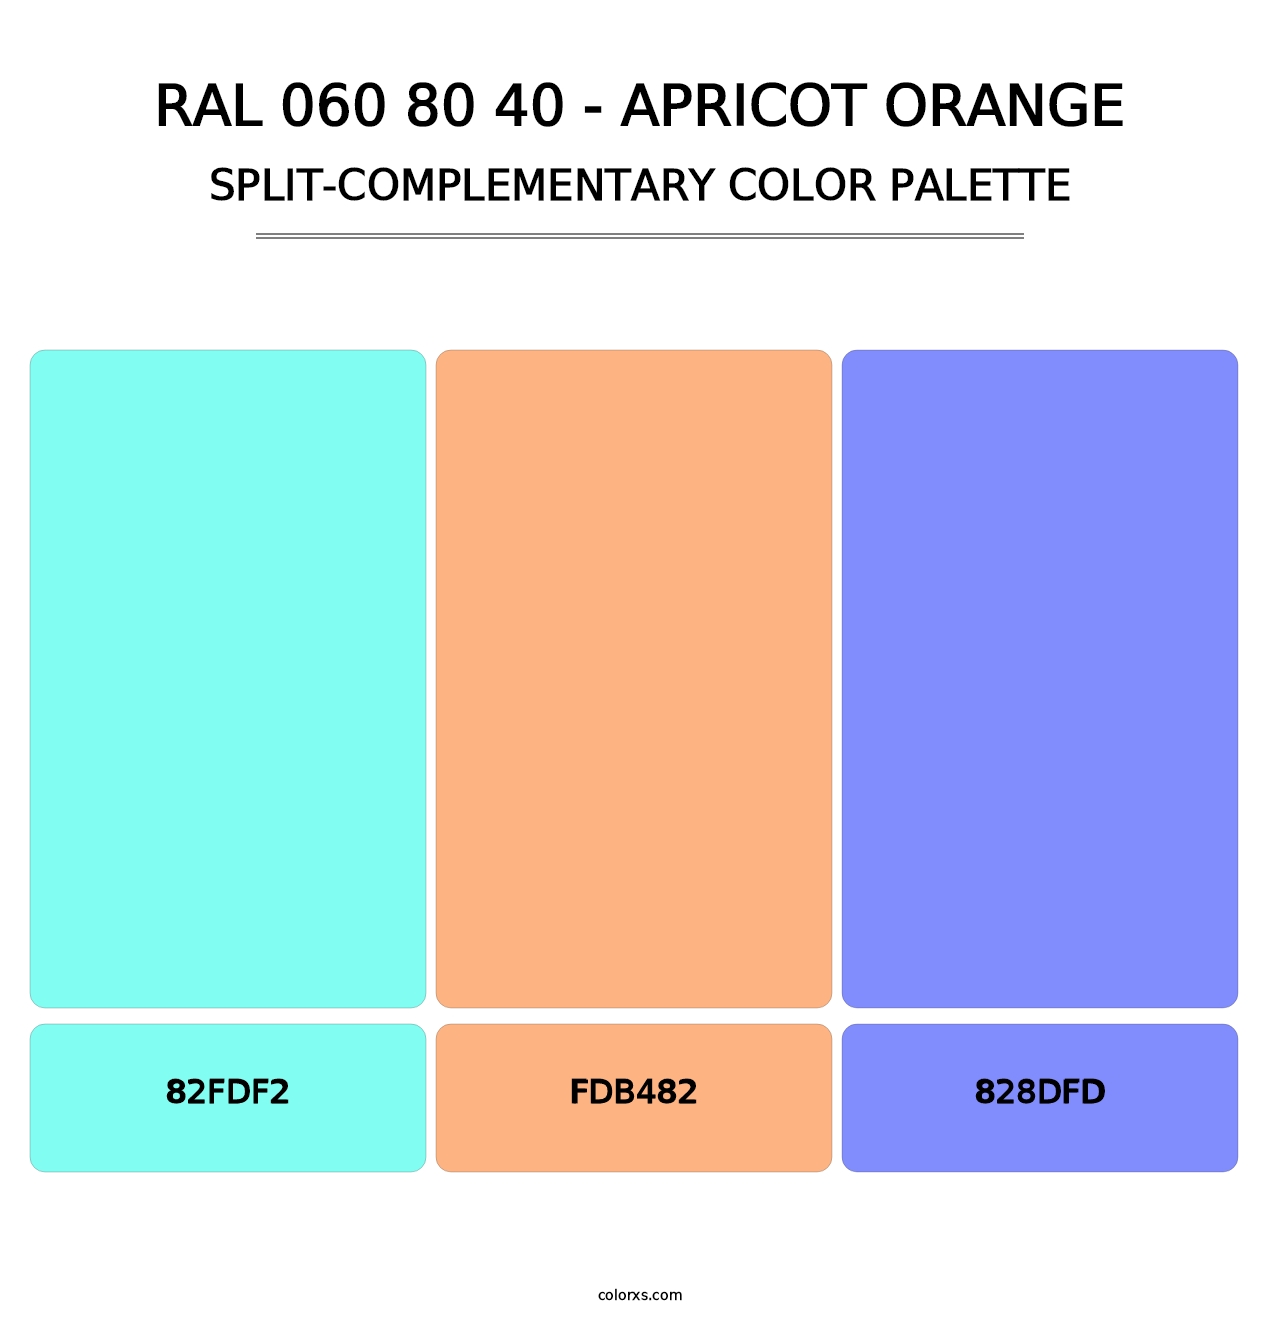 RAL 060 80 40 - Apricot Orange - Split-Complementary Color Palette